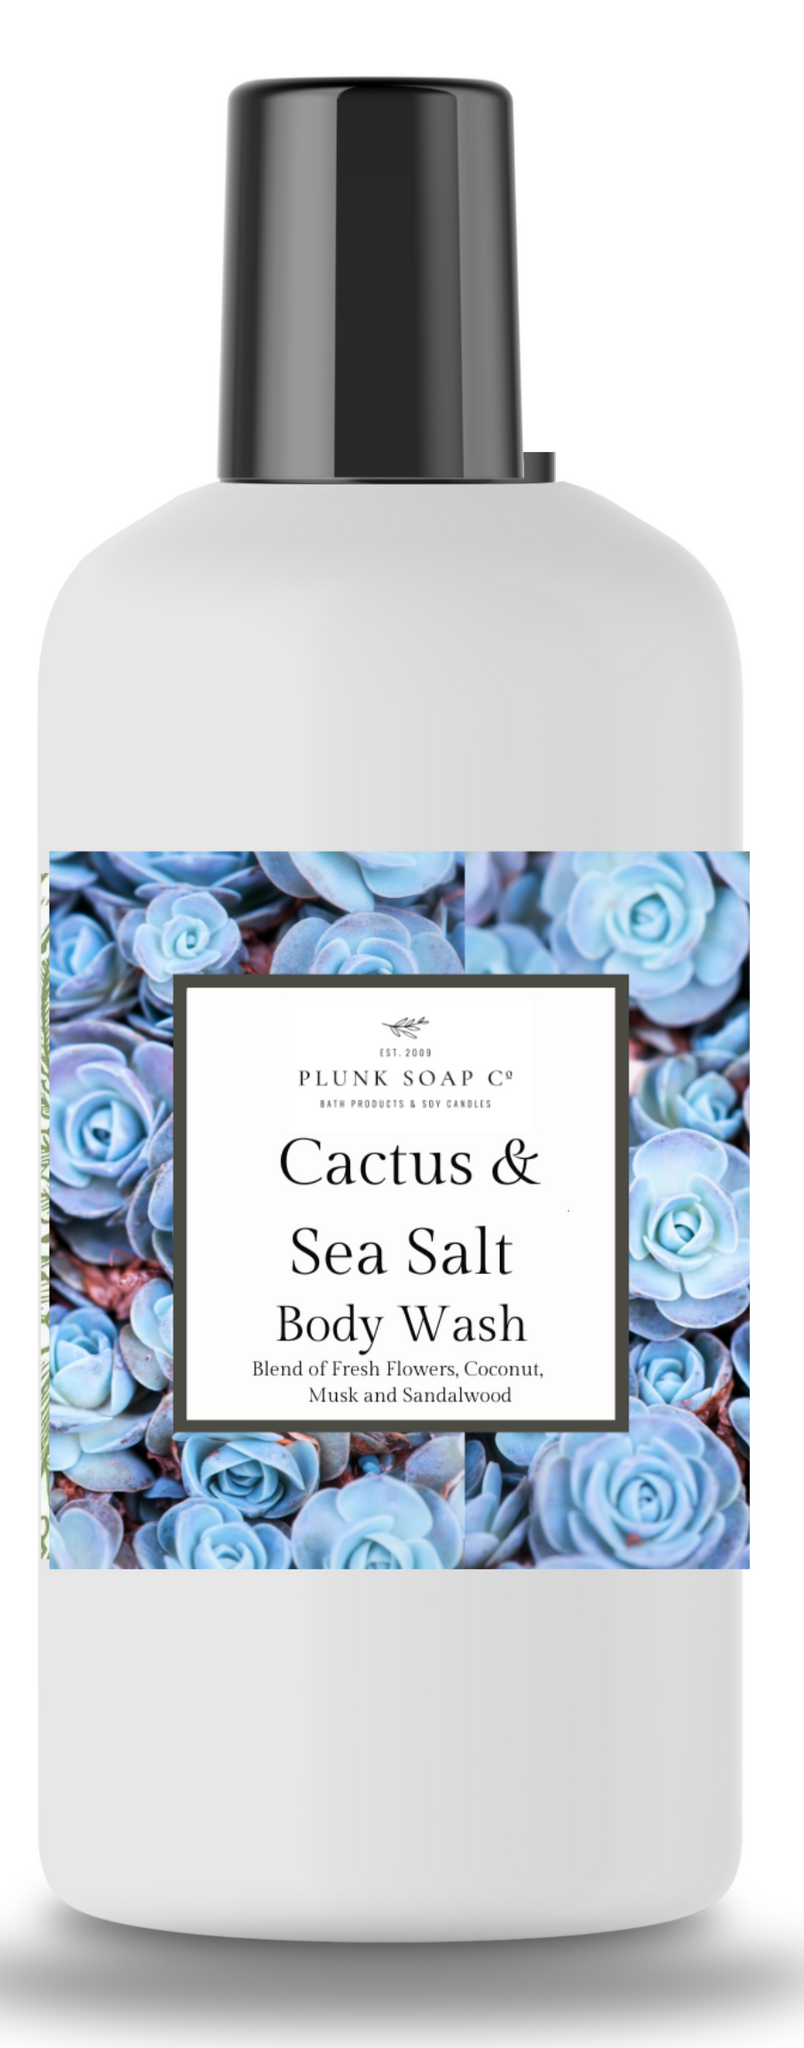 Cactus and Sea Salt Body Wash